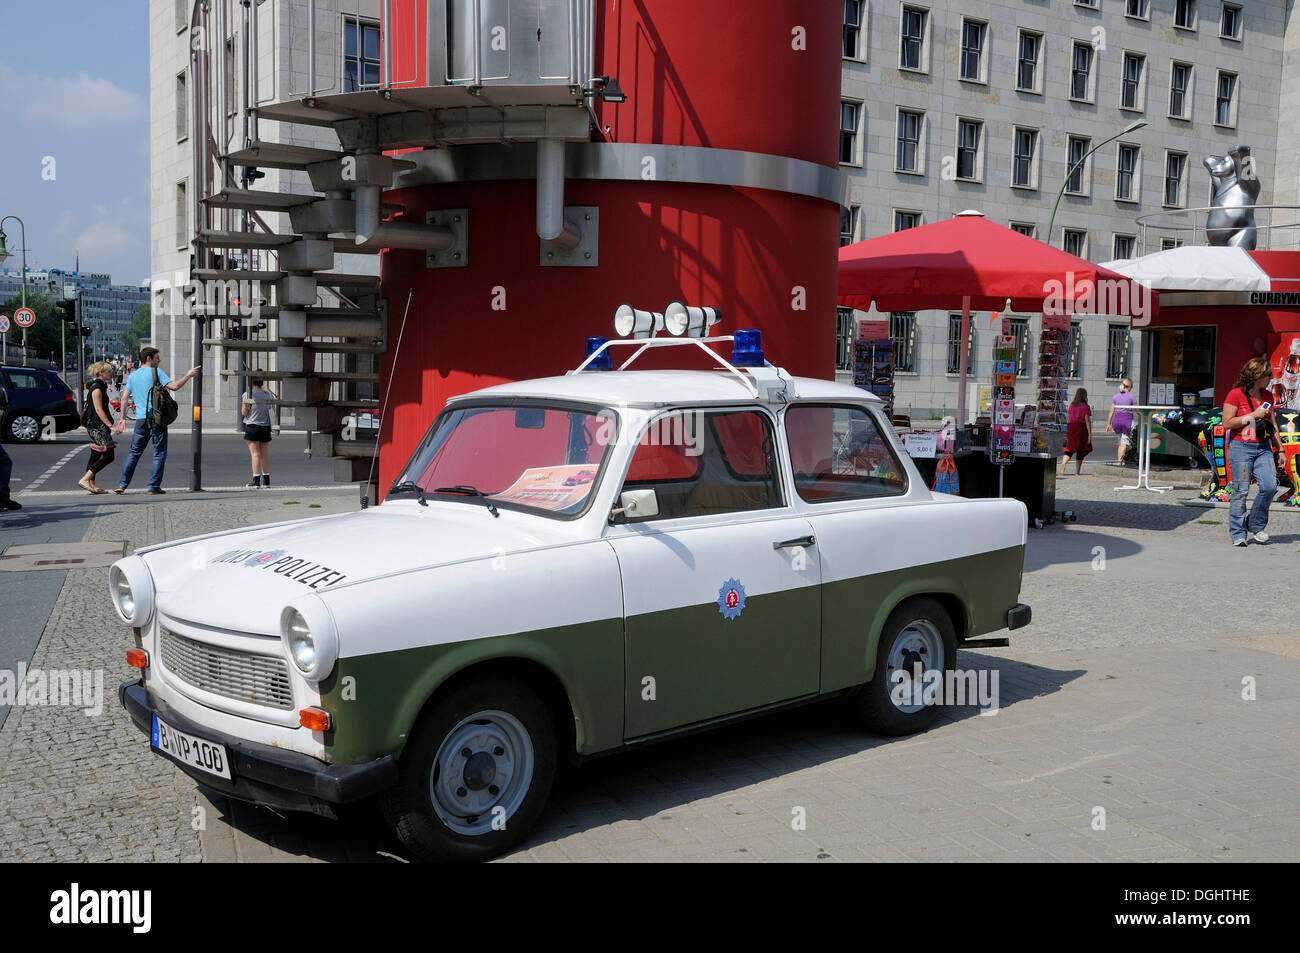 Fake police car, Trabant, also called Trabi, Berlin Stock Photo